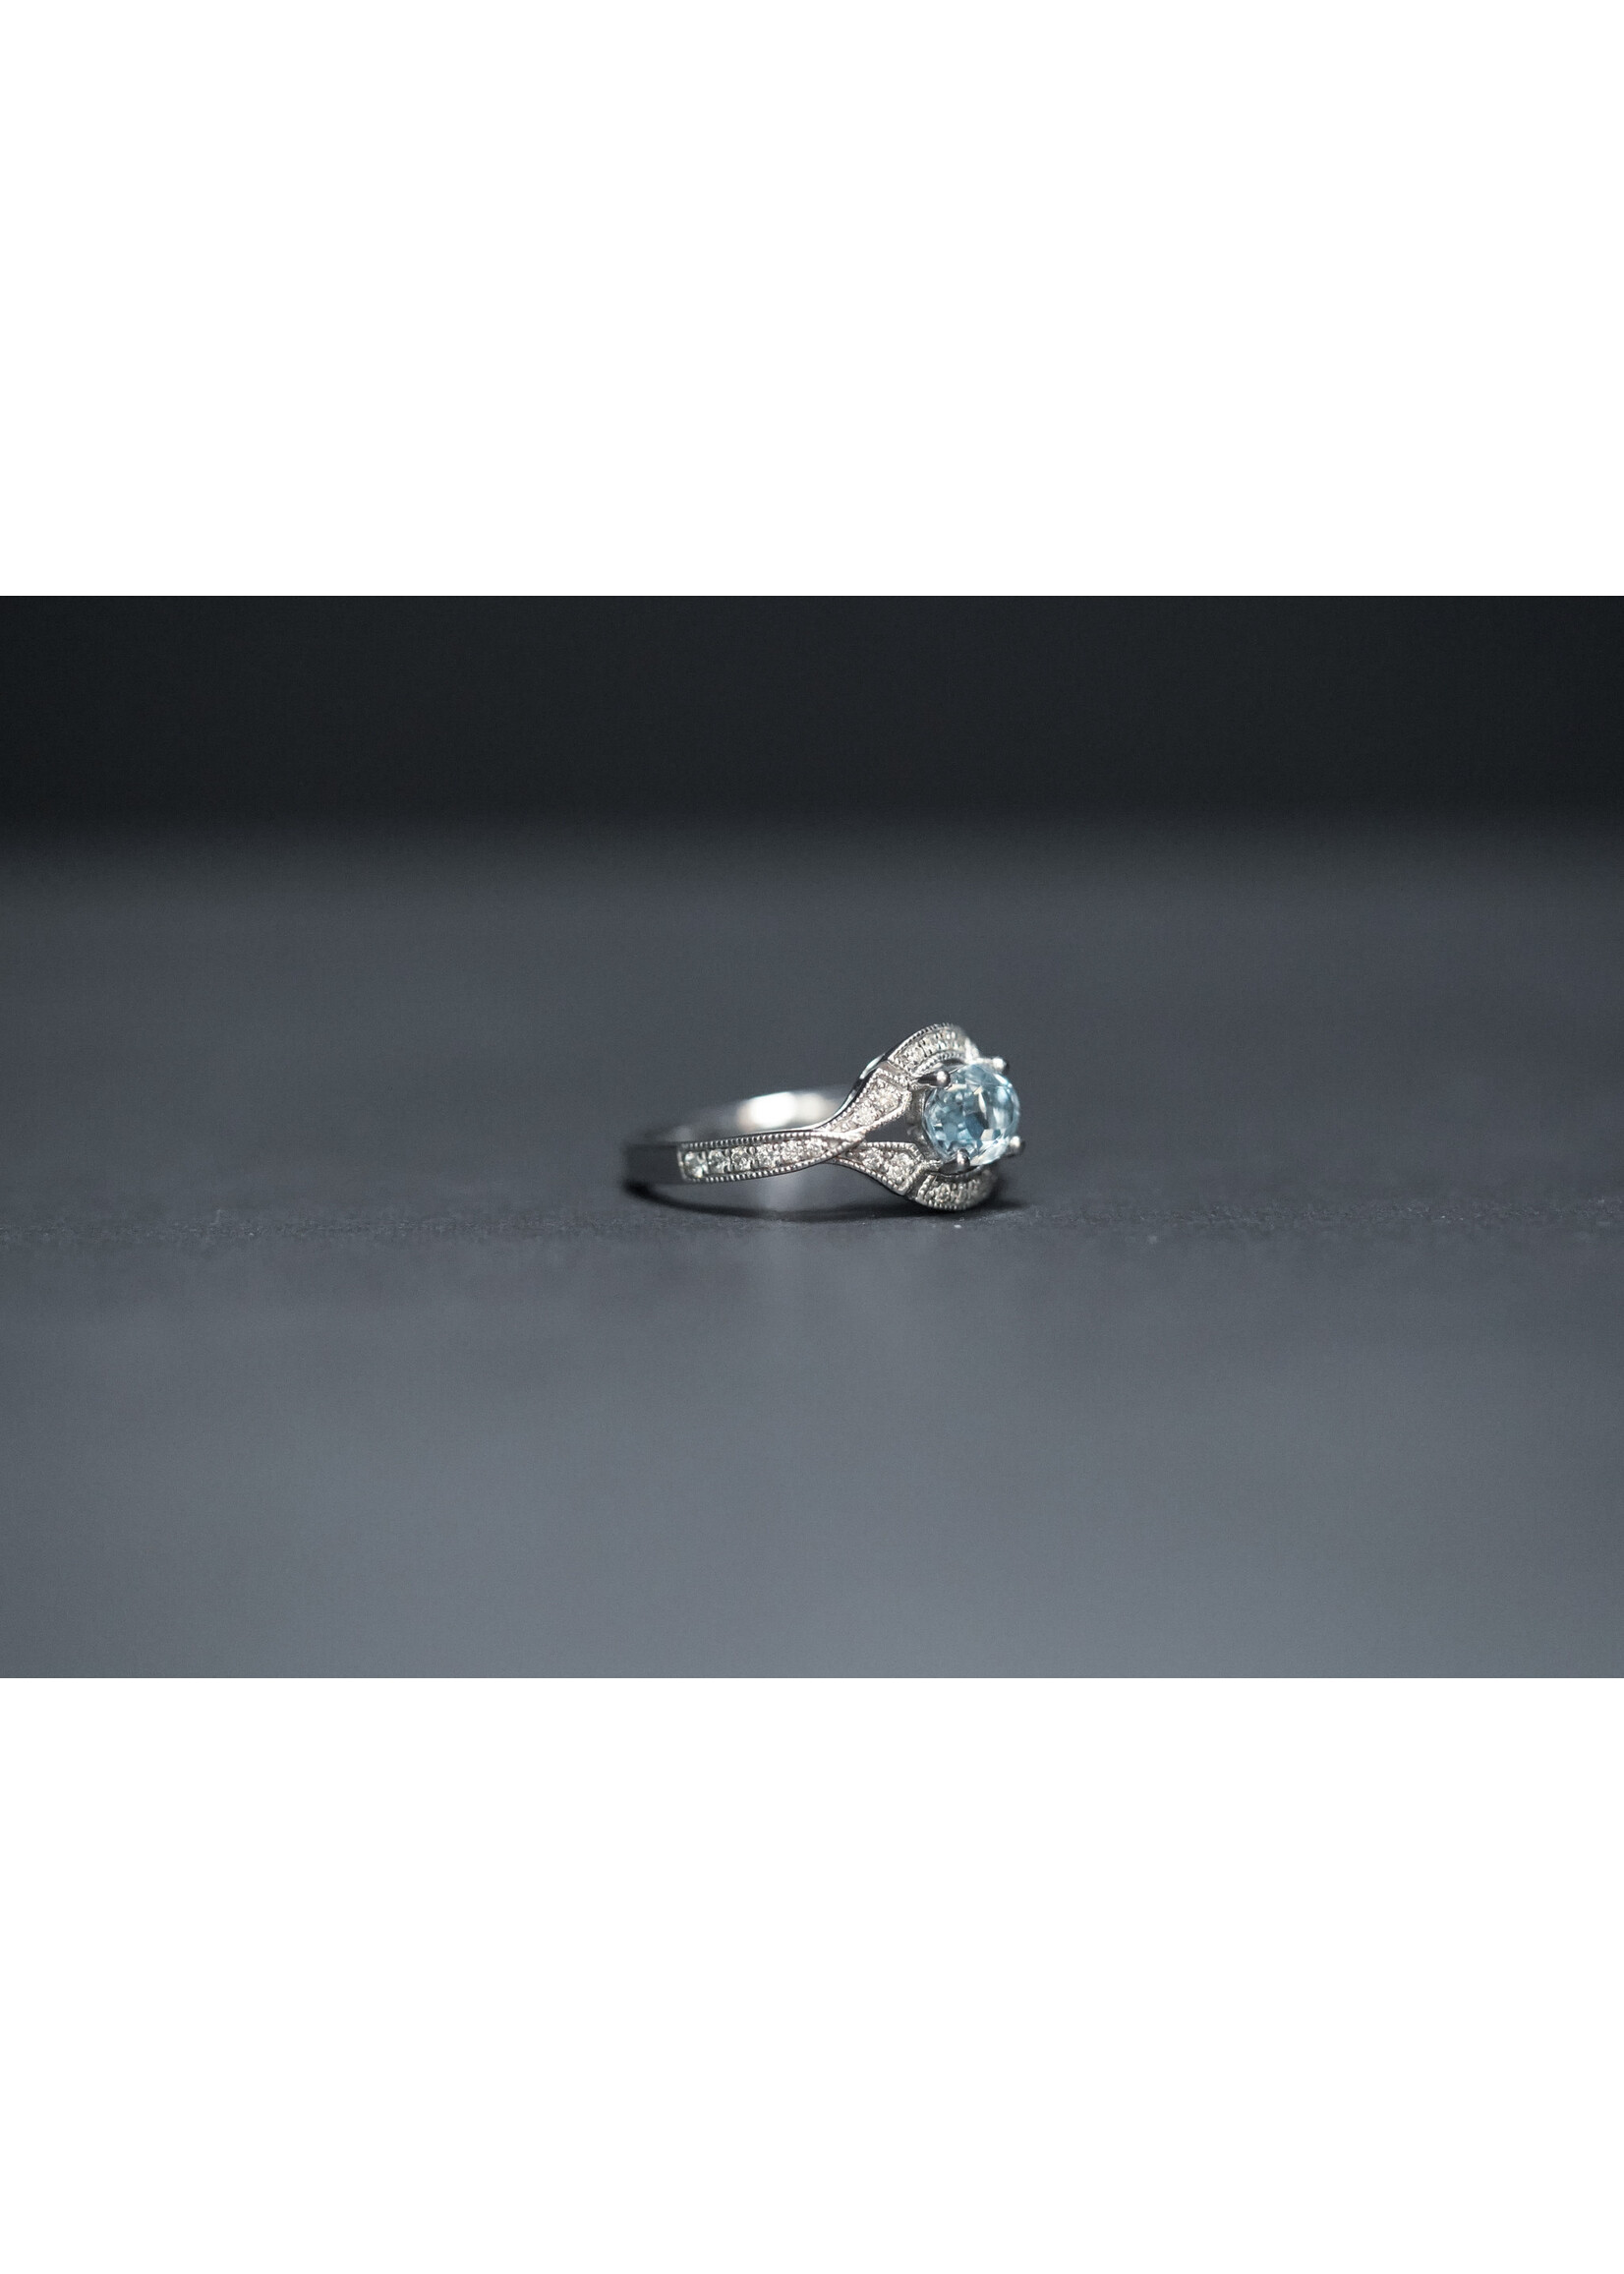 Platinum 6.67g 1.21ctw (.95ctr) Aquamarine & Diamond Fashion Ring (size 7)